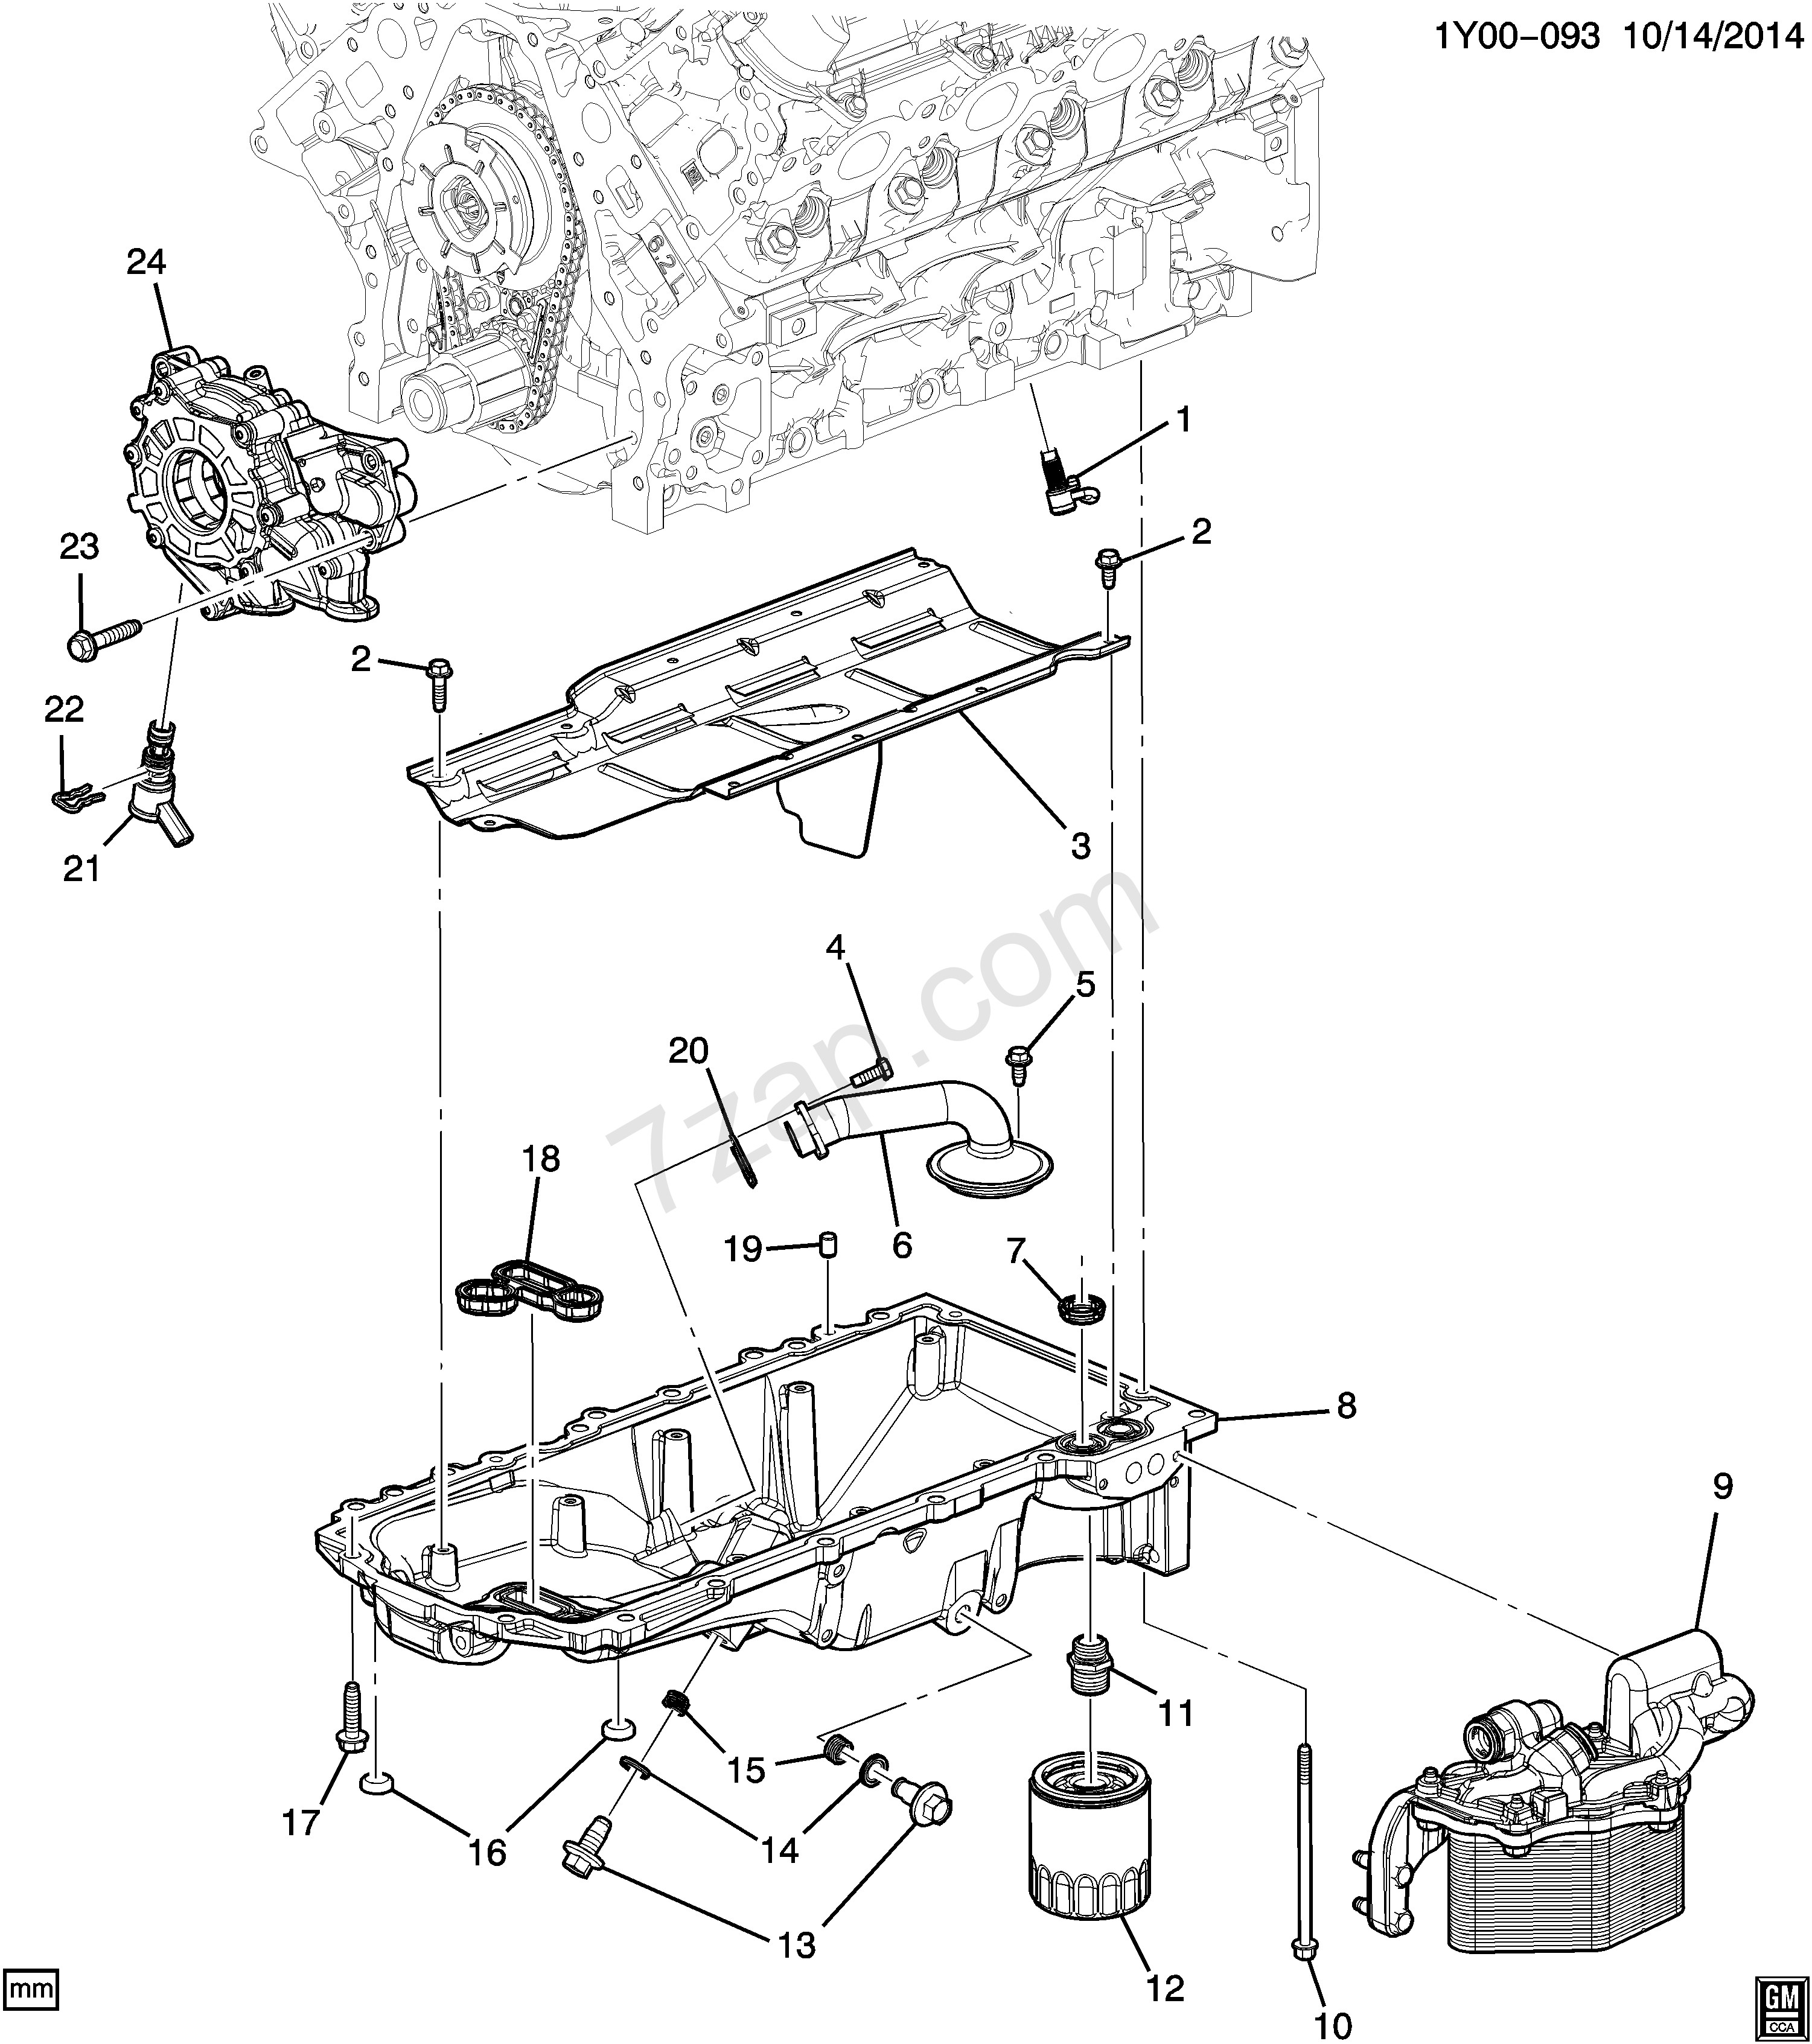 Chevy Oem Parts Diagram 2014 2017 Yy07 67 Engine asm 6 2l V8 Part 4 Oil Pump Pan Of Chevy Oem Parts Diagram